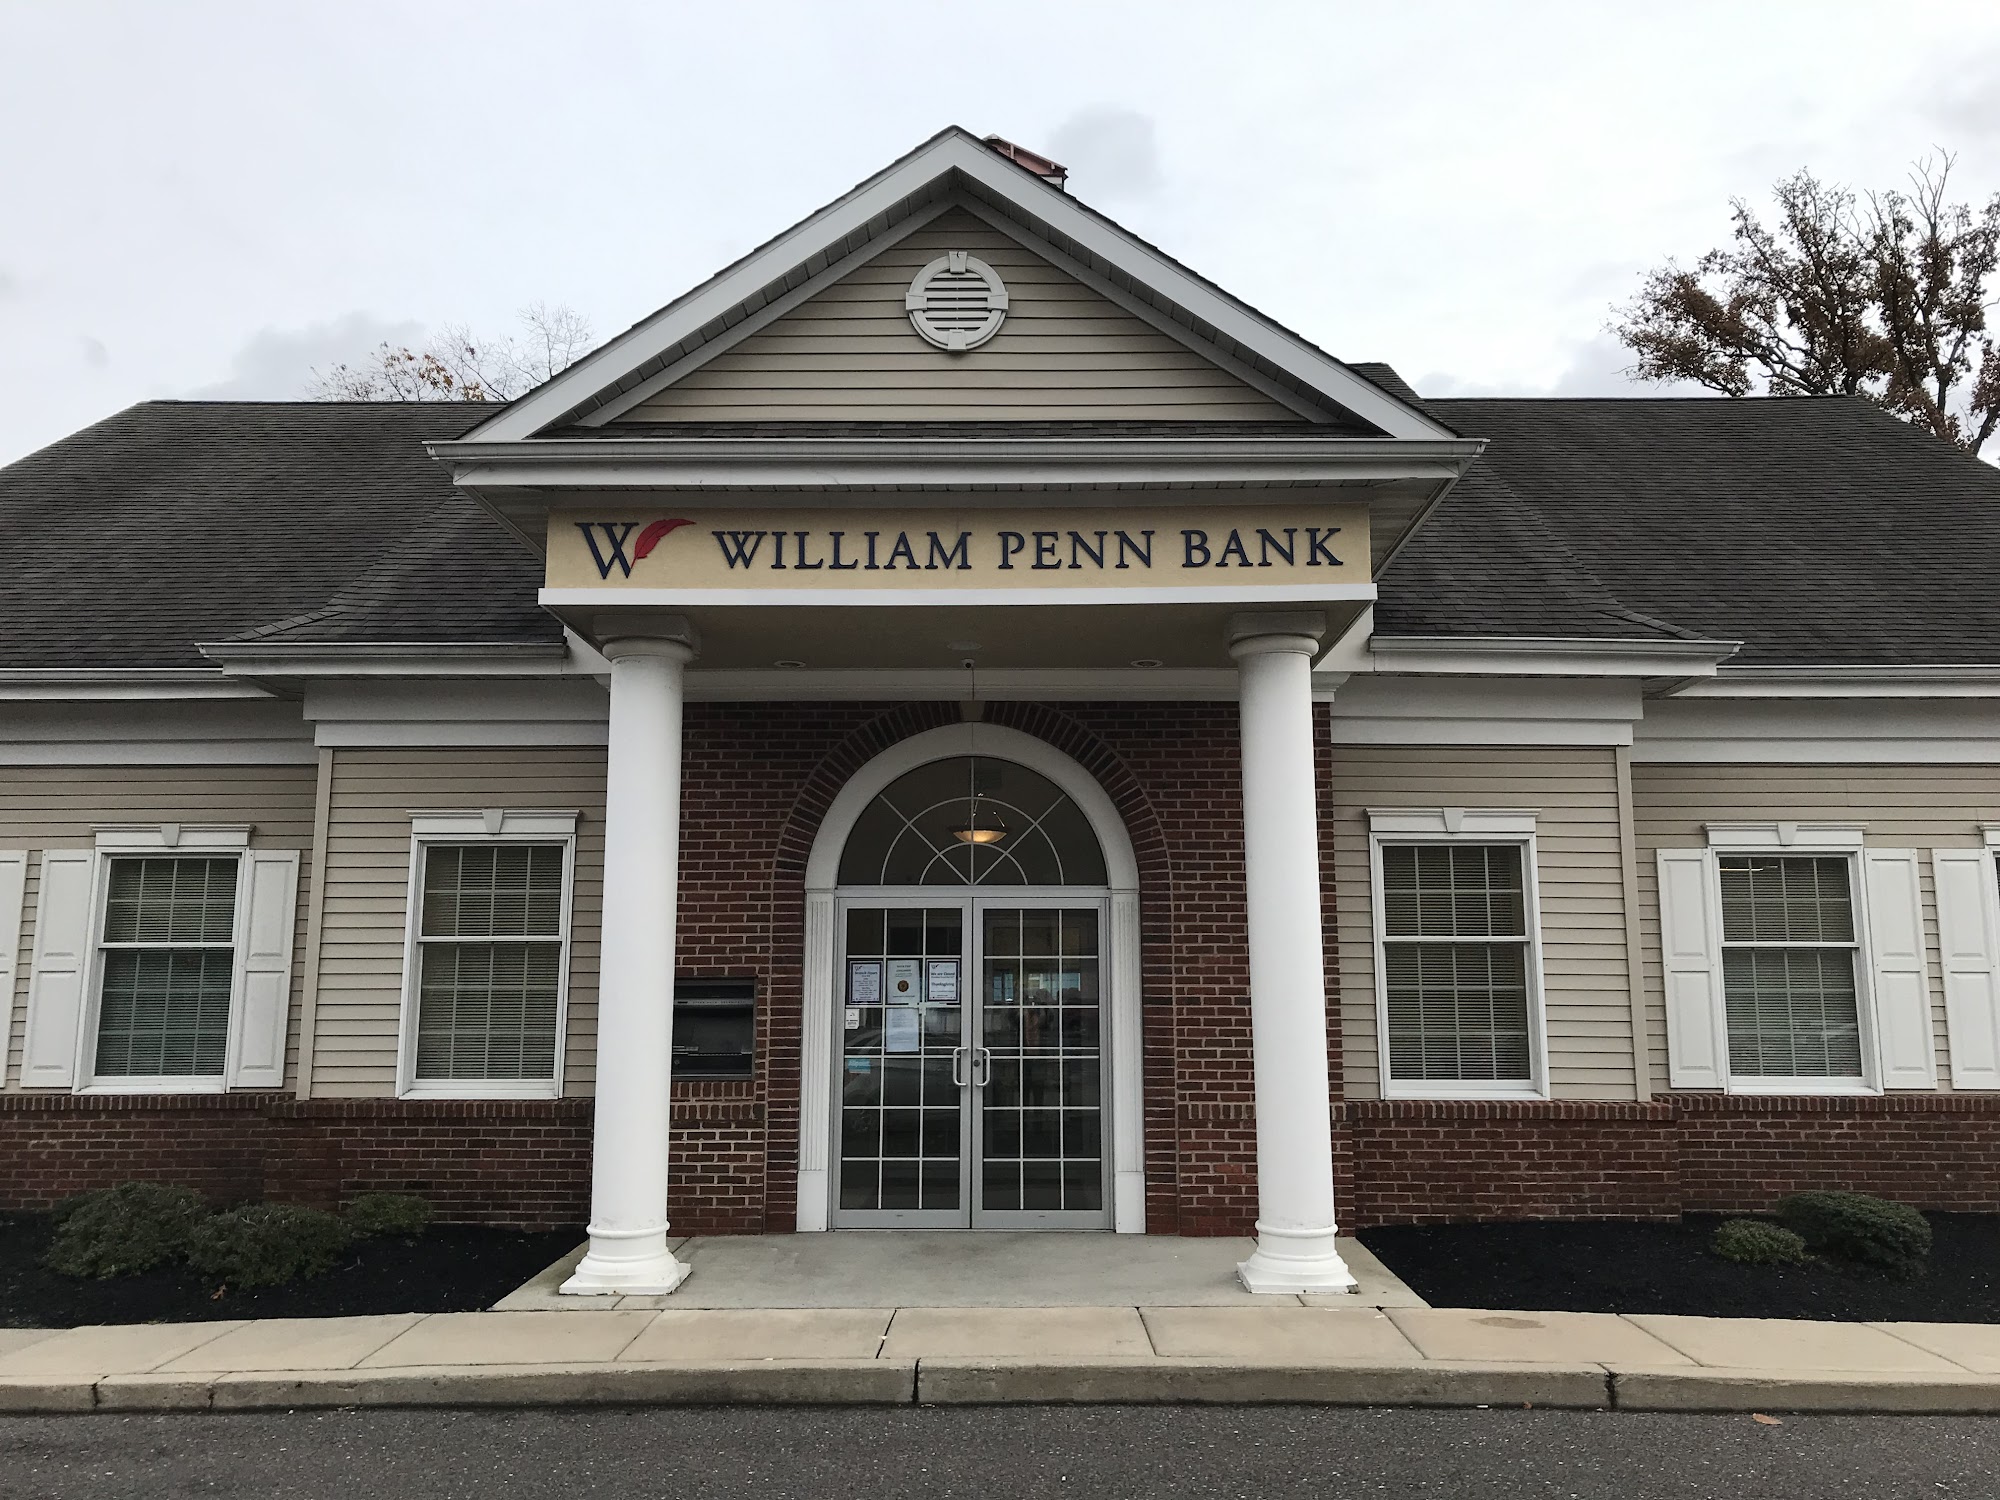 William Penn Bank